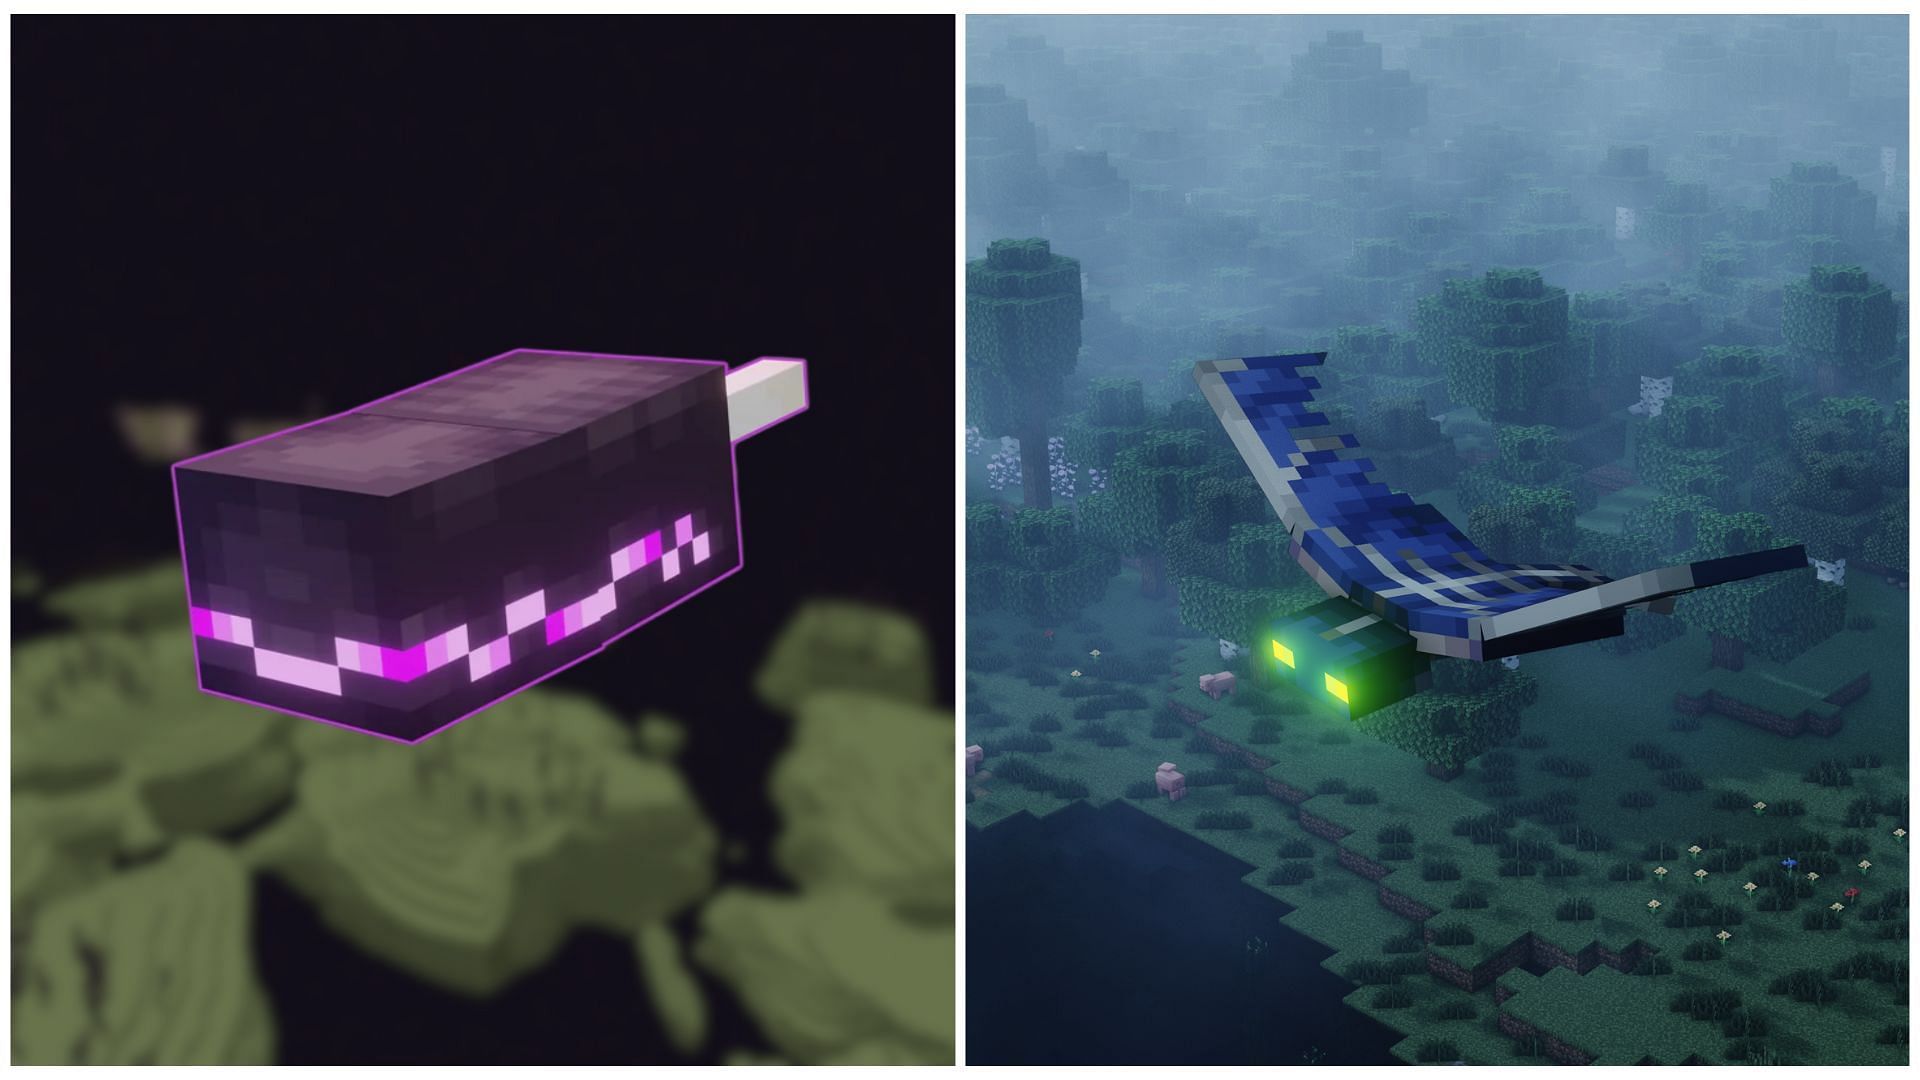 The Wraith vs Phantom in Minecraft (Image via u/LonelyMusicDisc on Reddit/Mojang)